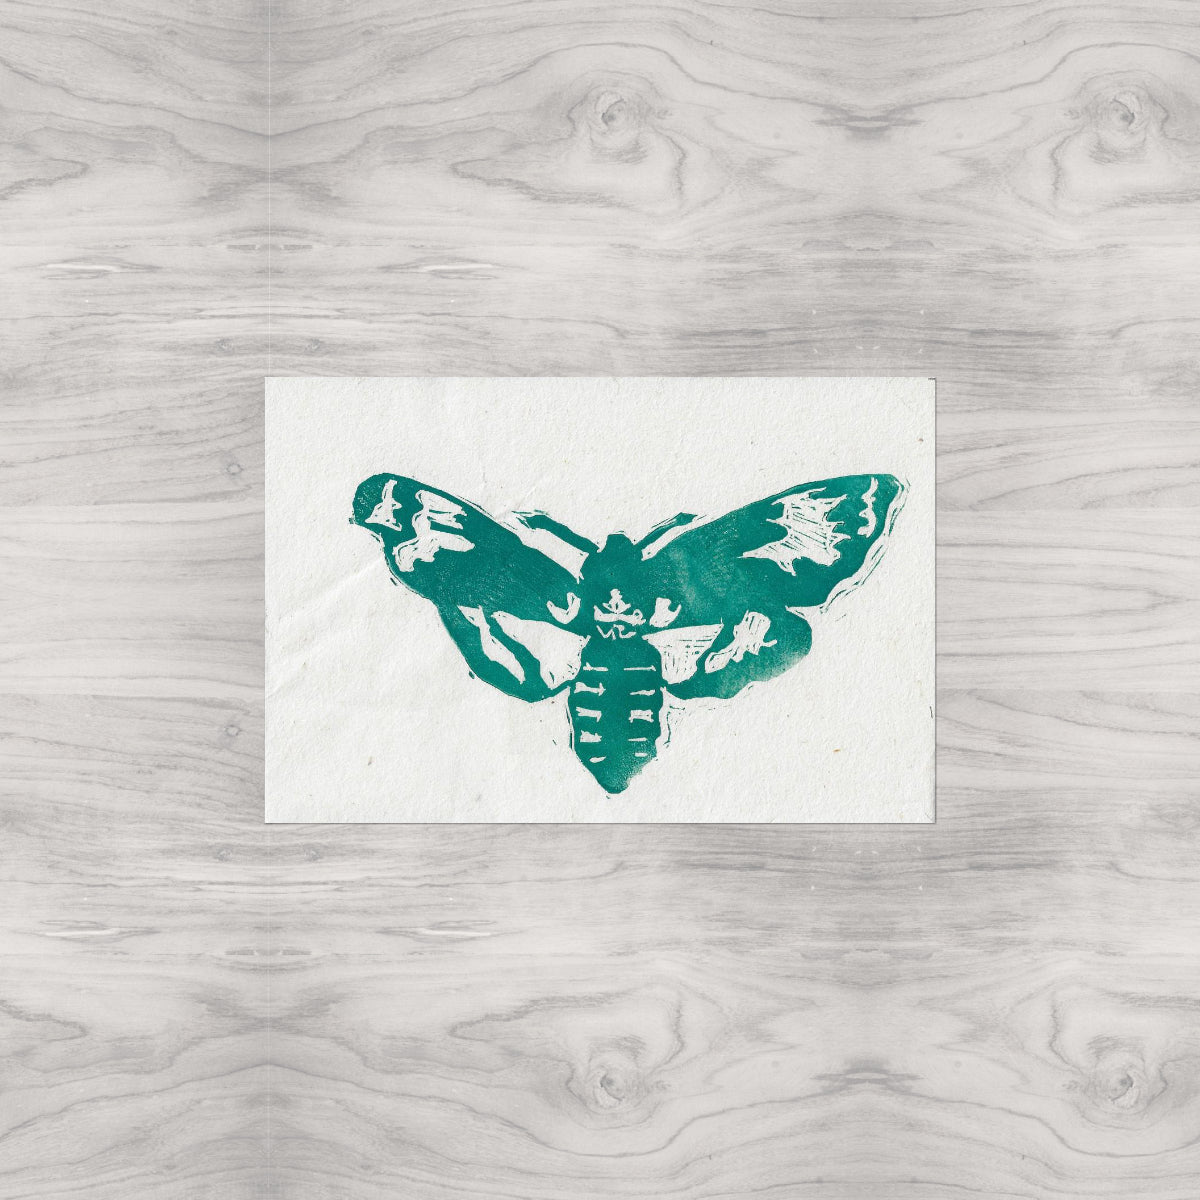 Moth Linocut Print Version 2